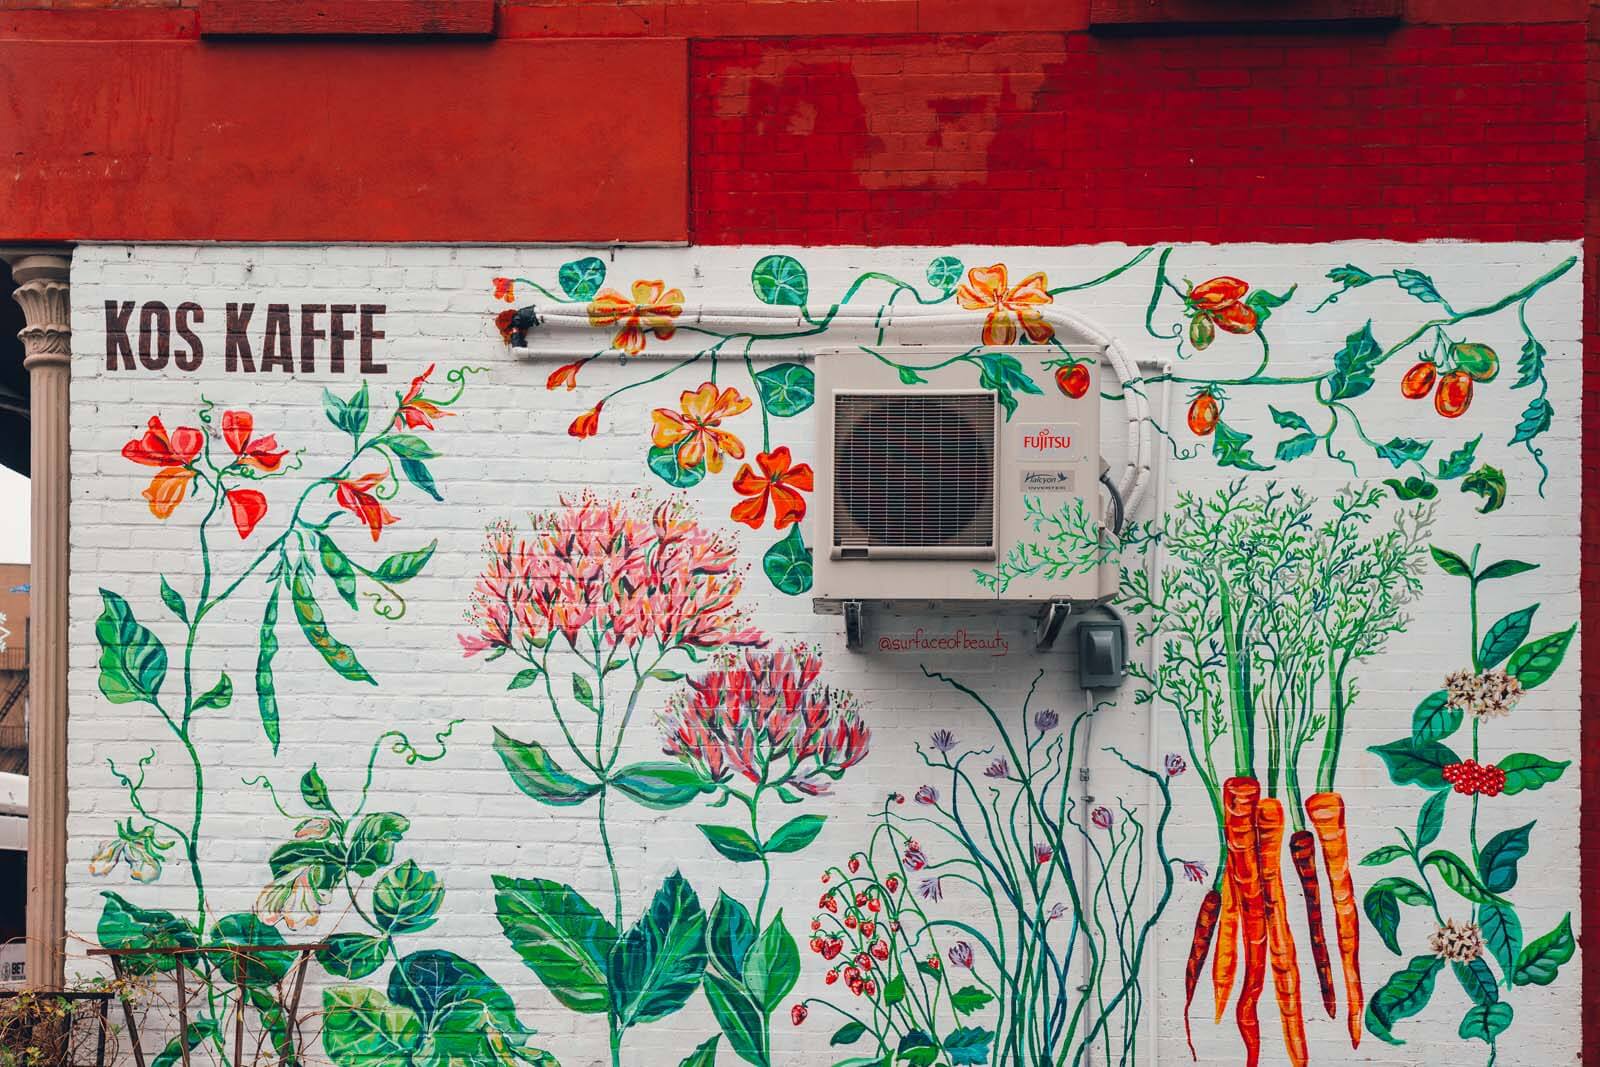 Kos Kaffe Mural in Park Slope Brooklyn